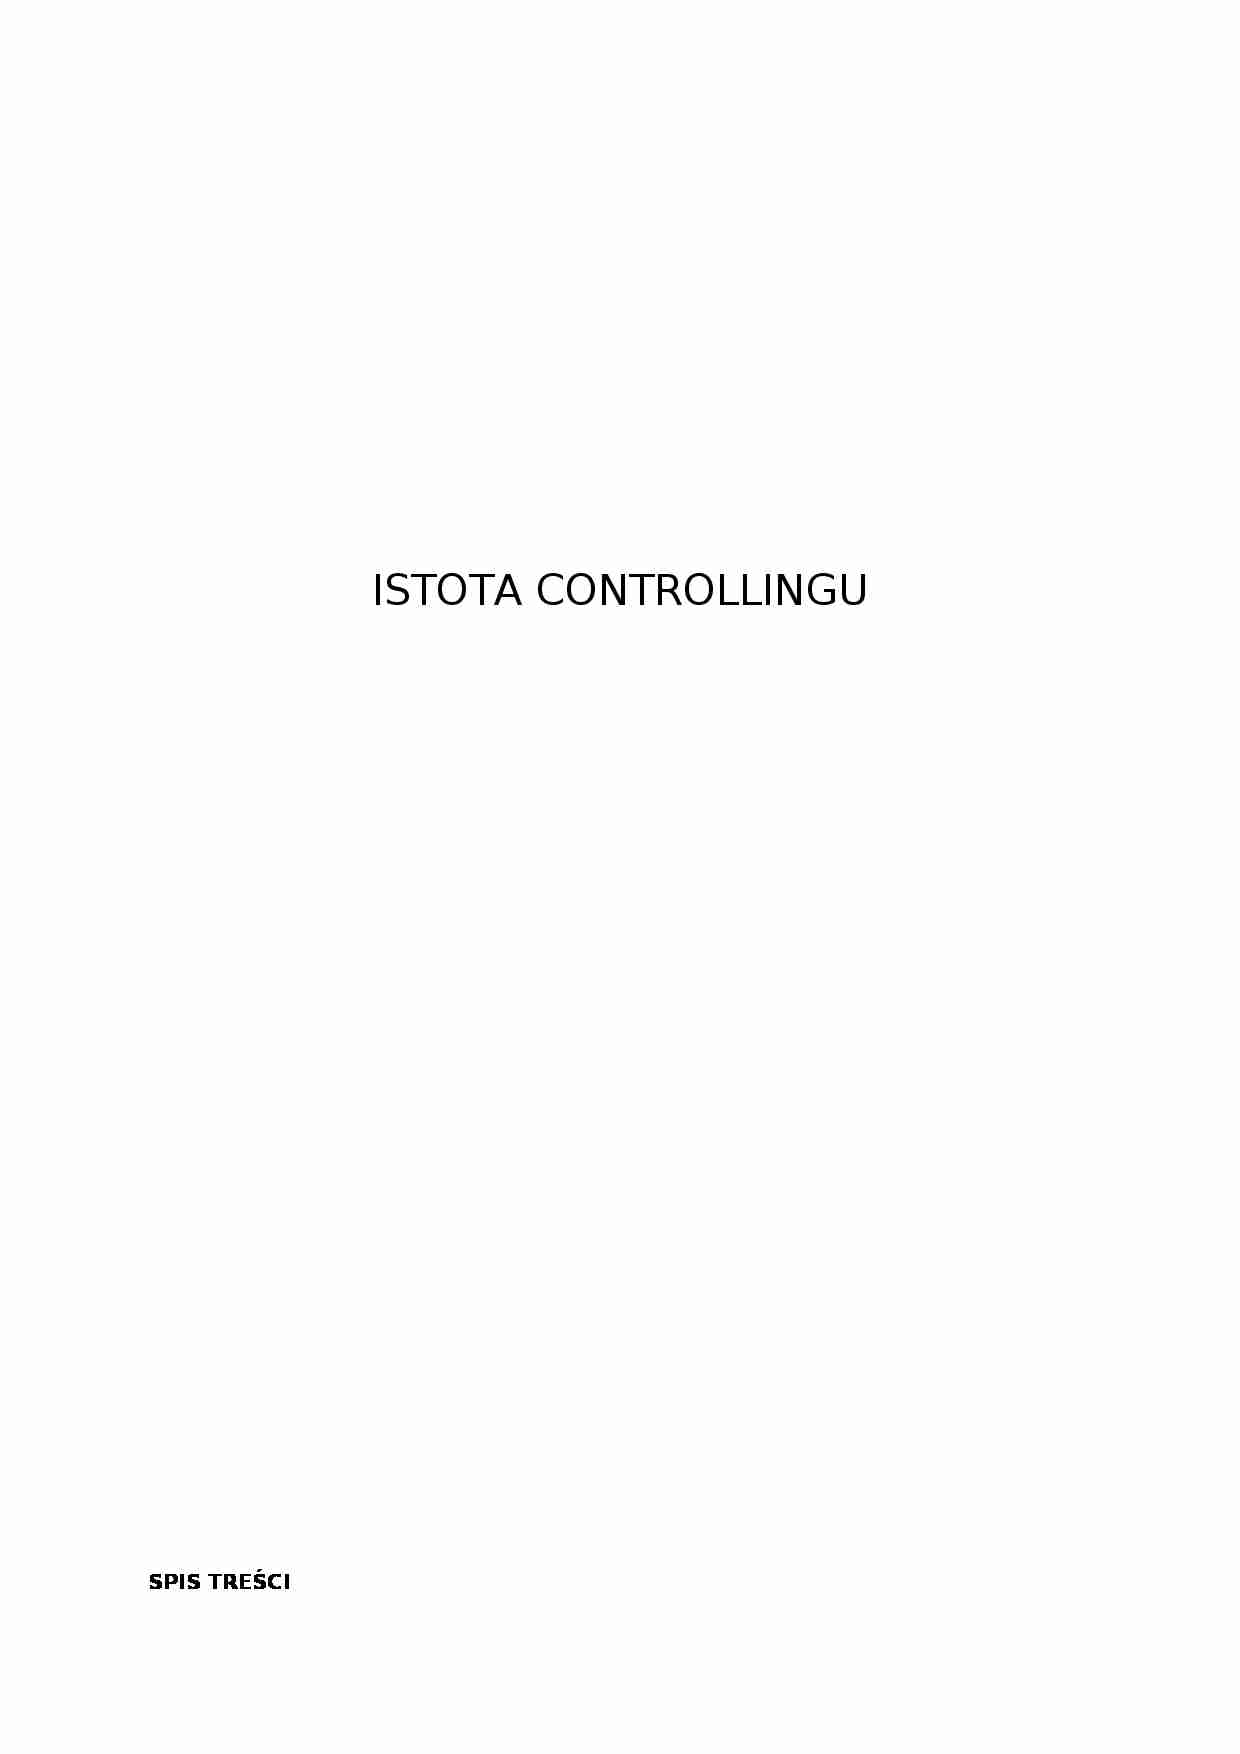 Istota Controllingu (13 stron).doc - strona 1